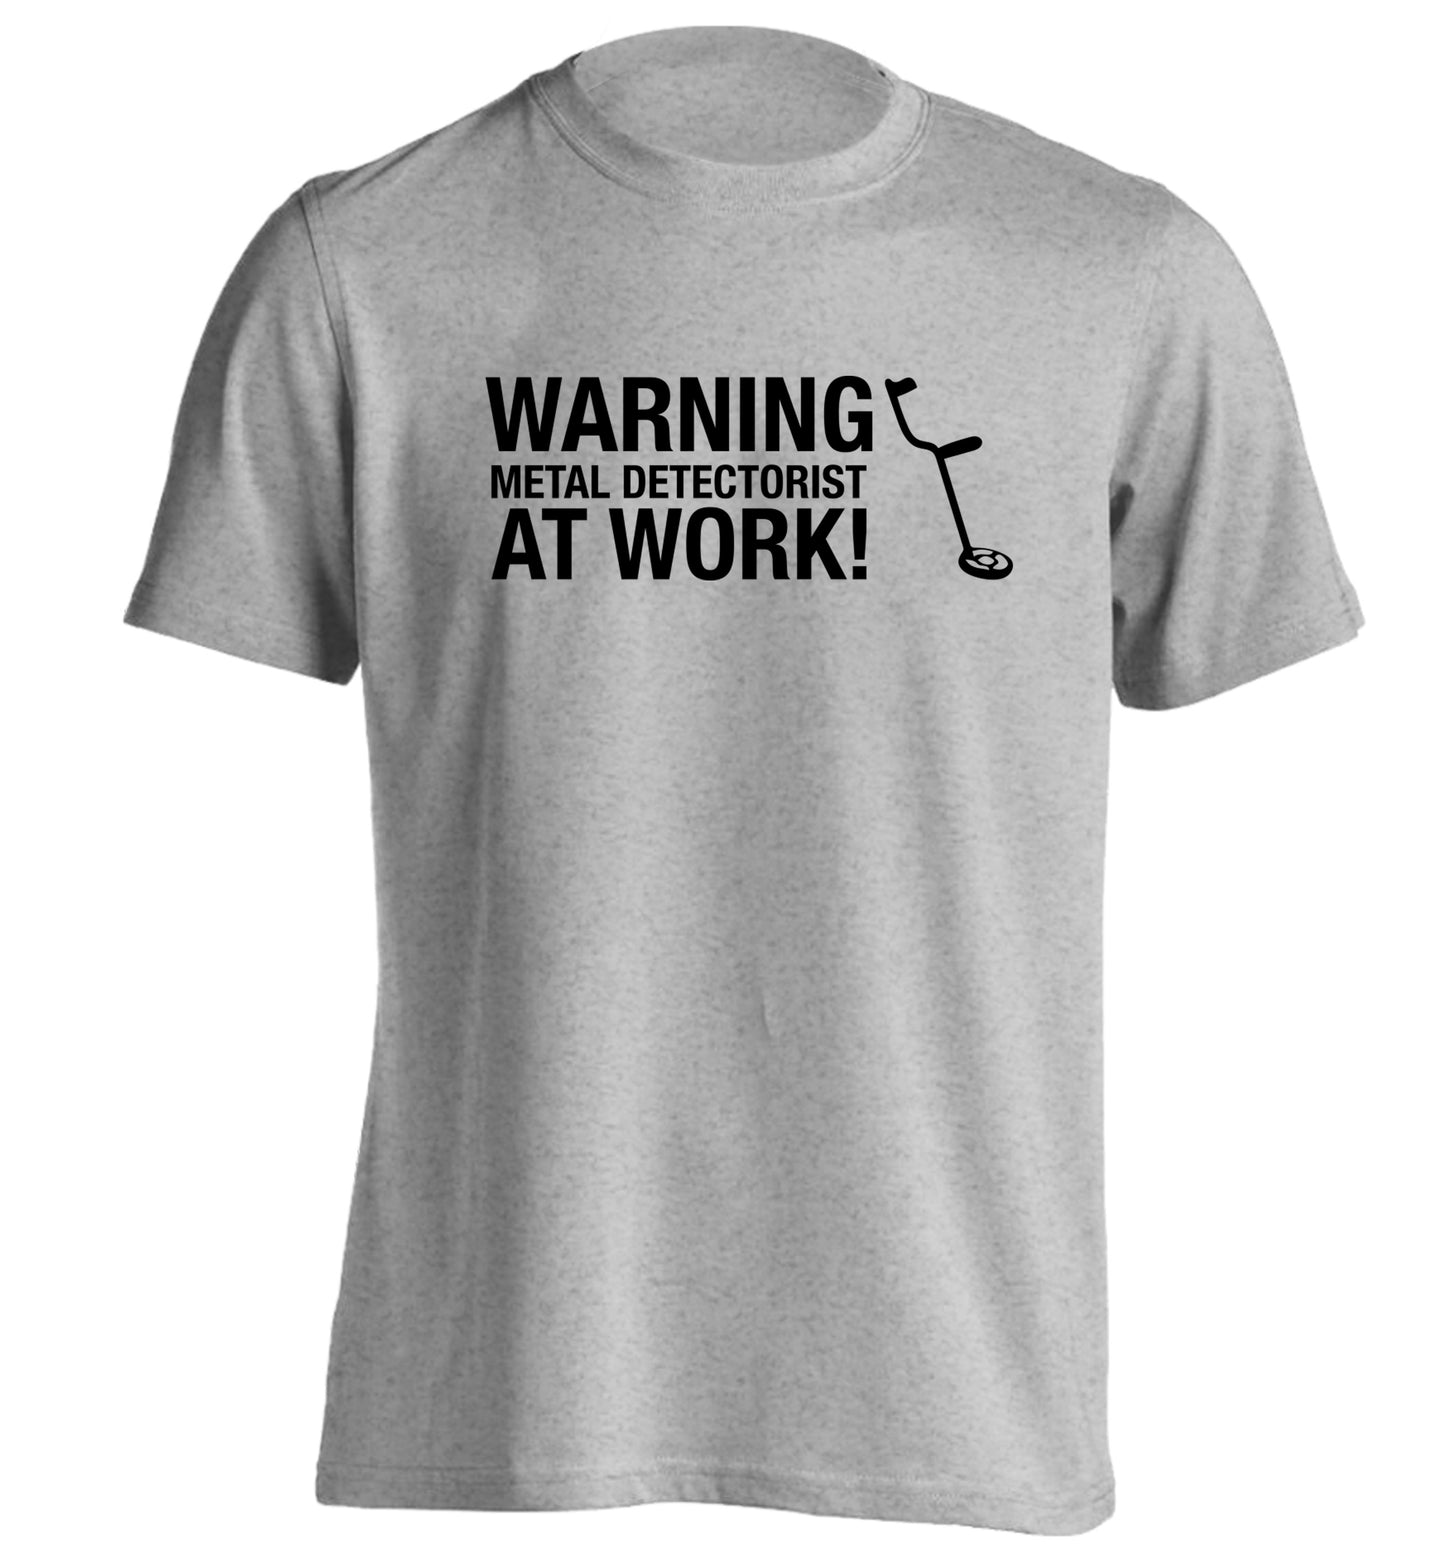 Warning metal detectorist at work! adults unisex grey Tshirt 2XL